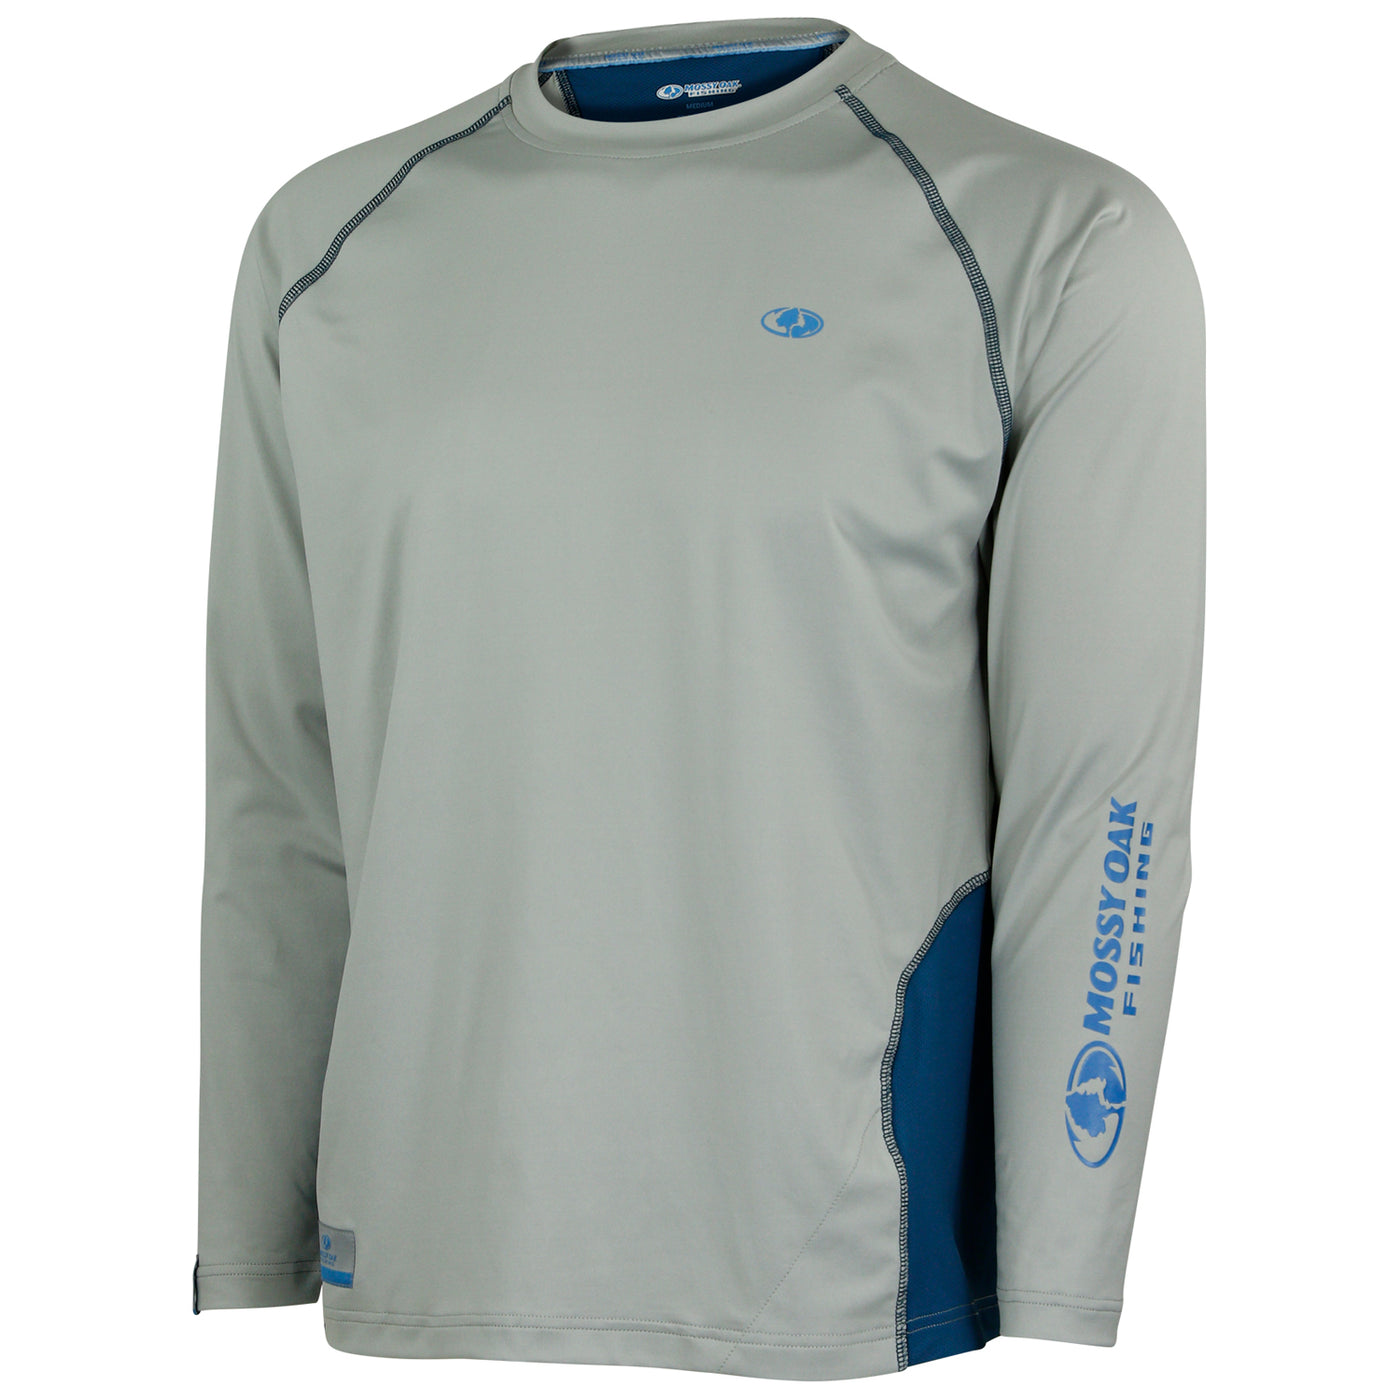 Mossy Oak Men's Long Sleeve Coolcore Fishing Shirt Cool Grey Front